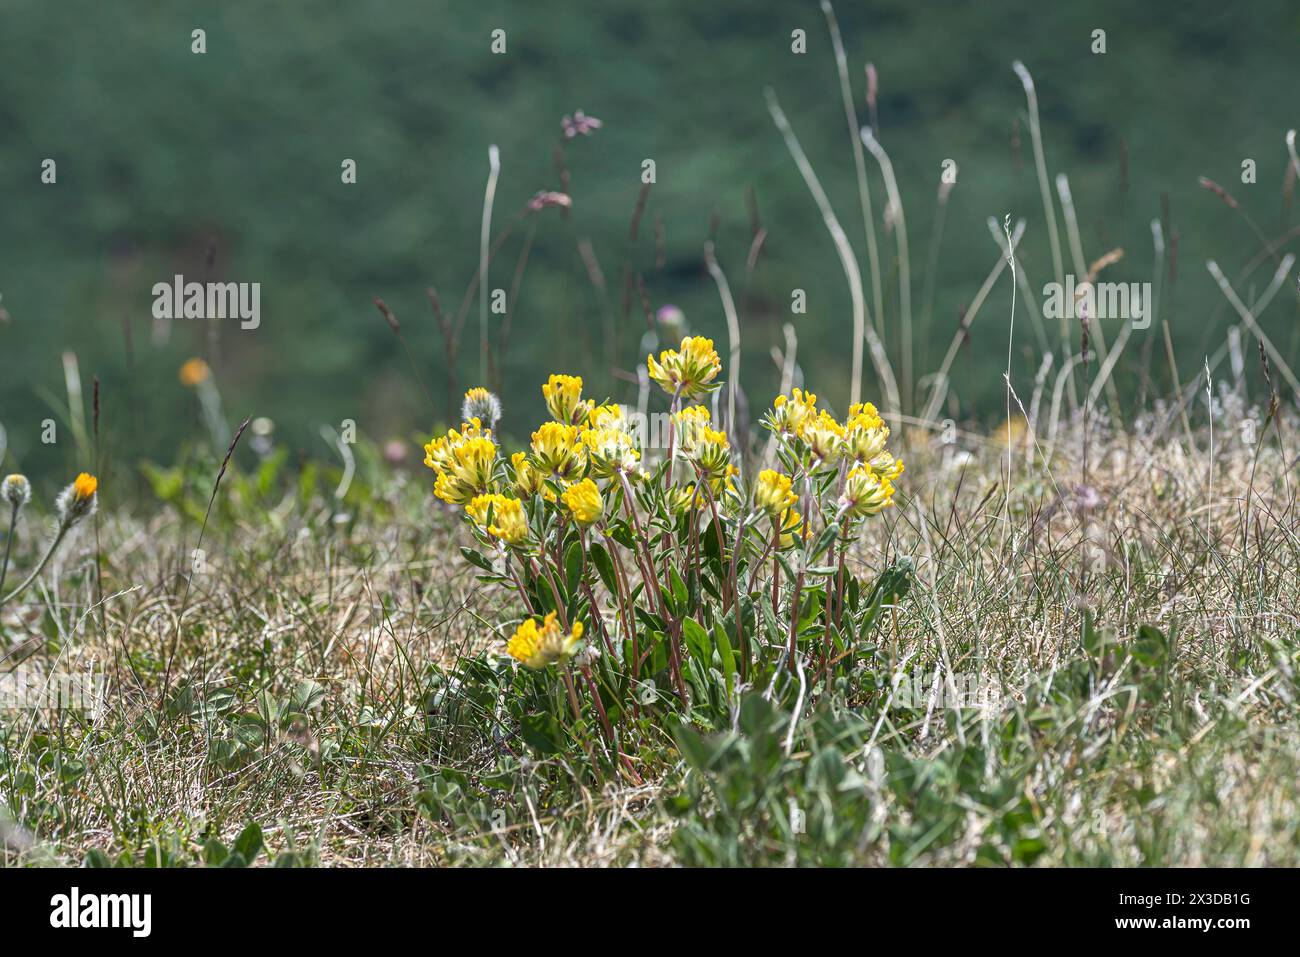 Common kidneyvetch, Rene vetch, Woundwort (Anthyllis vulneraria, vulneraria heterophylla), fioritura in un prato, Germania, Bundesrepublik Deutschland Foto Stock